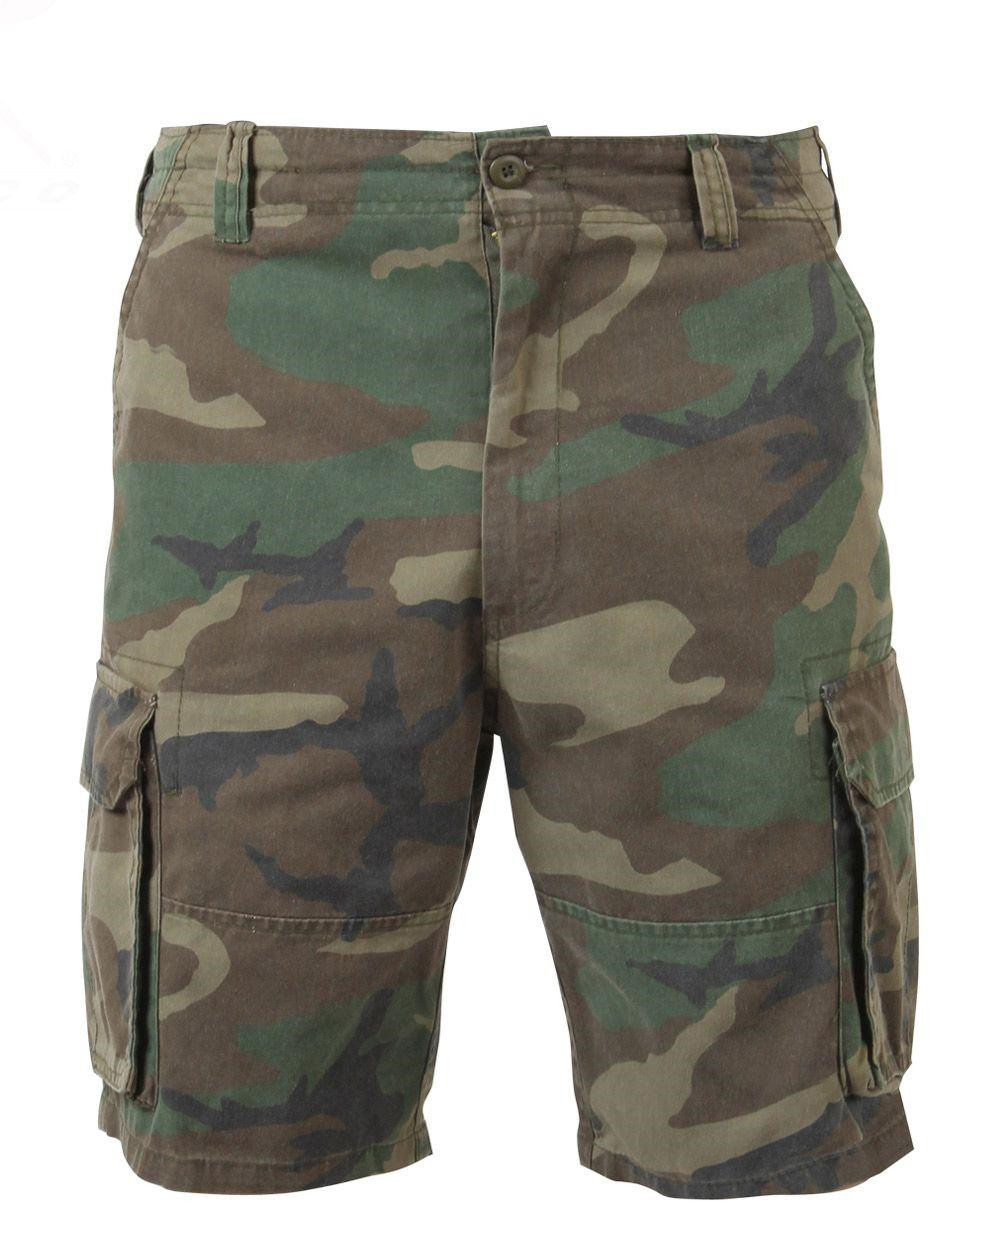 Rothco Cargo shorts (Woodland, M)